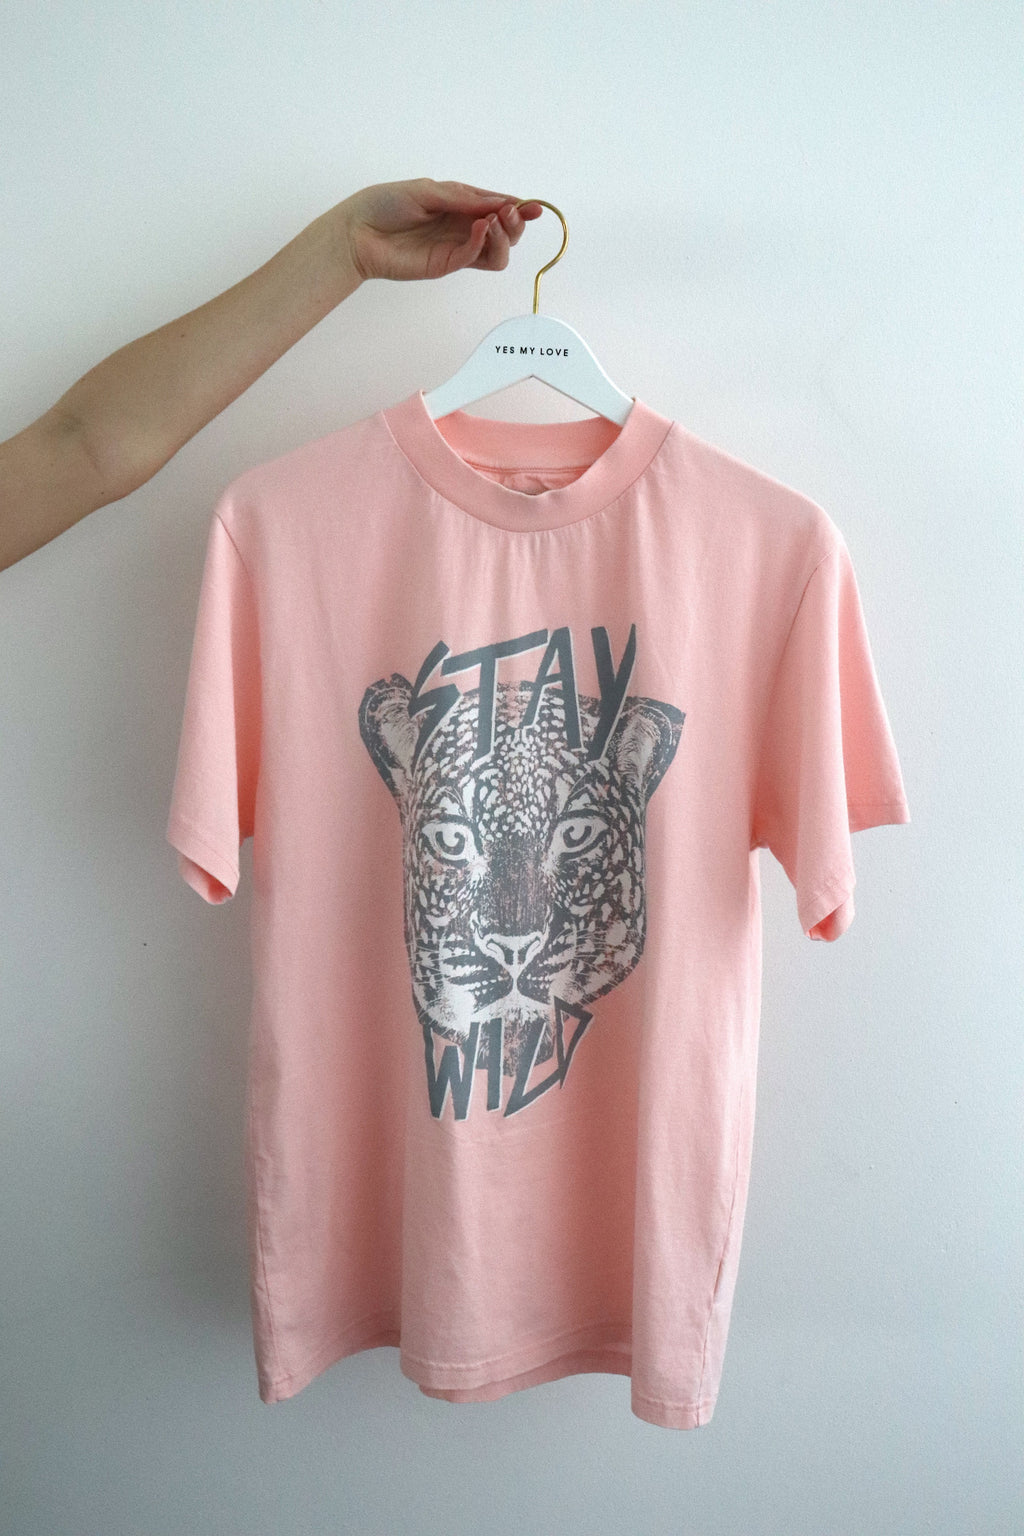 Stay light - T-Shirt Wild rose